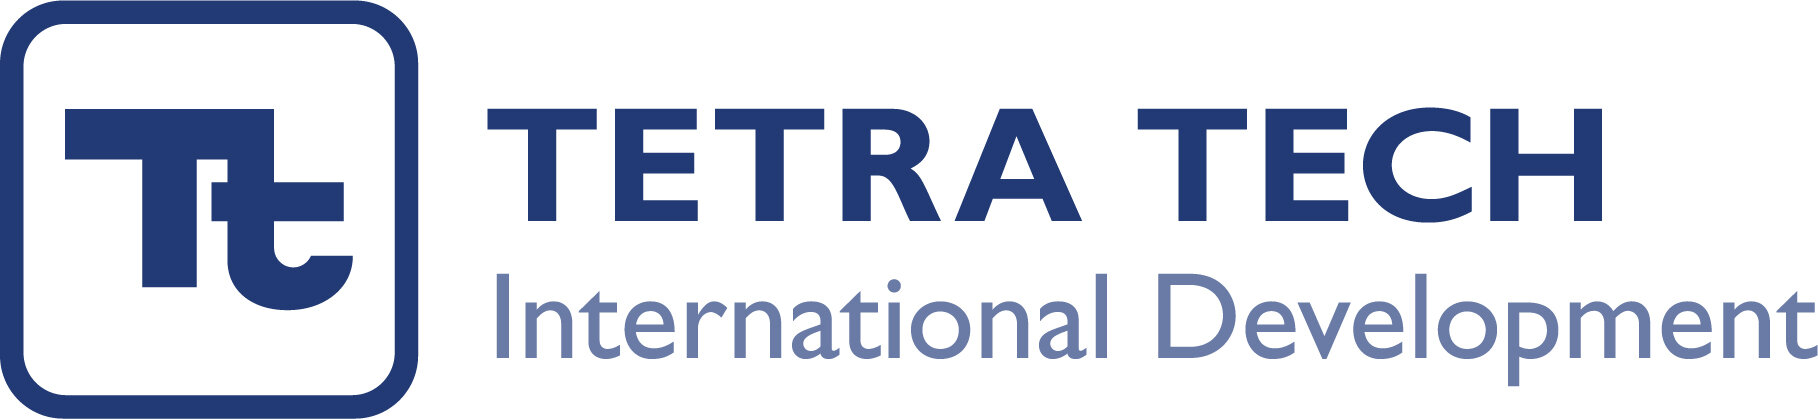 Tt_International_Development_logo_blu.jpg